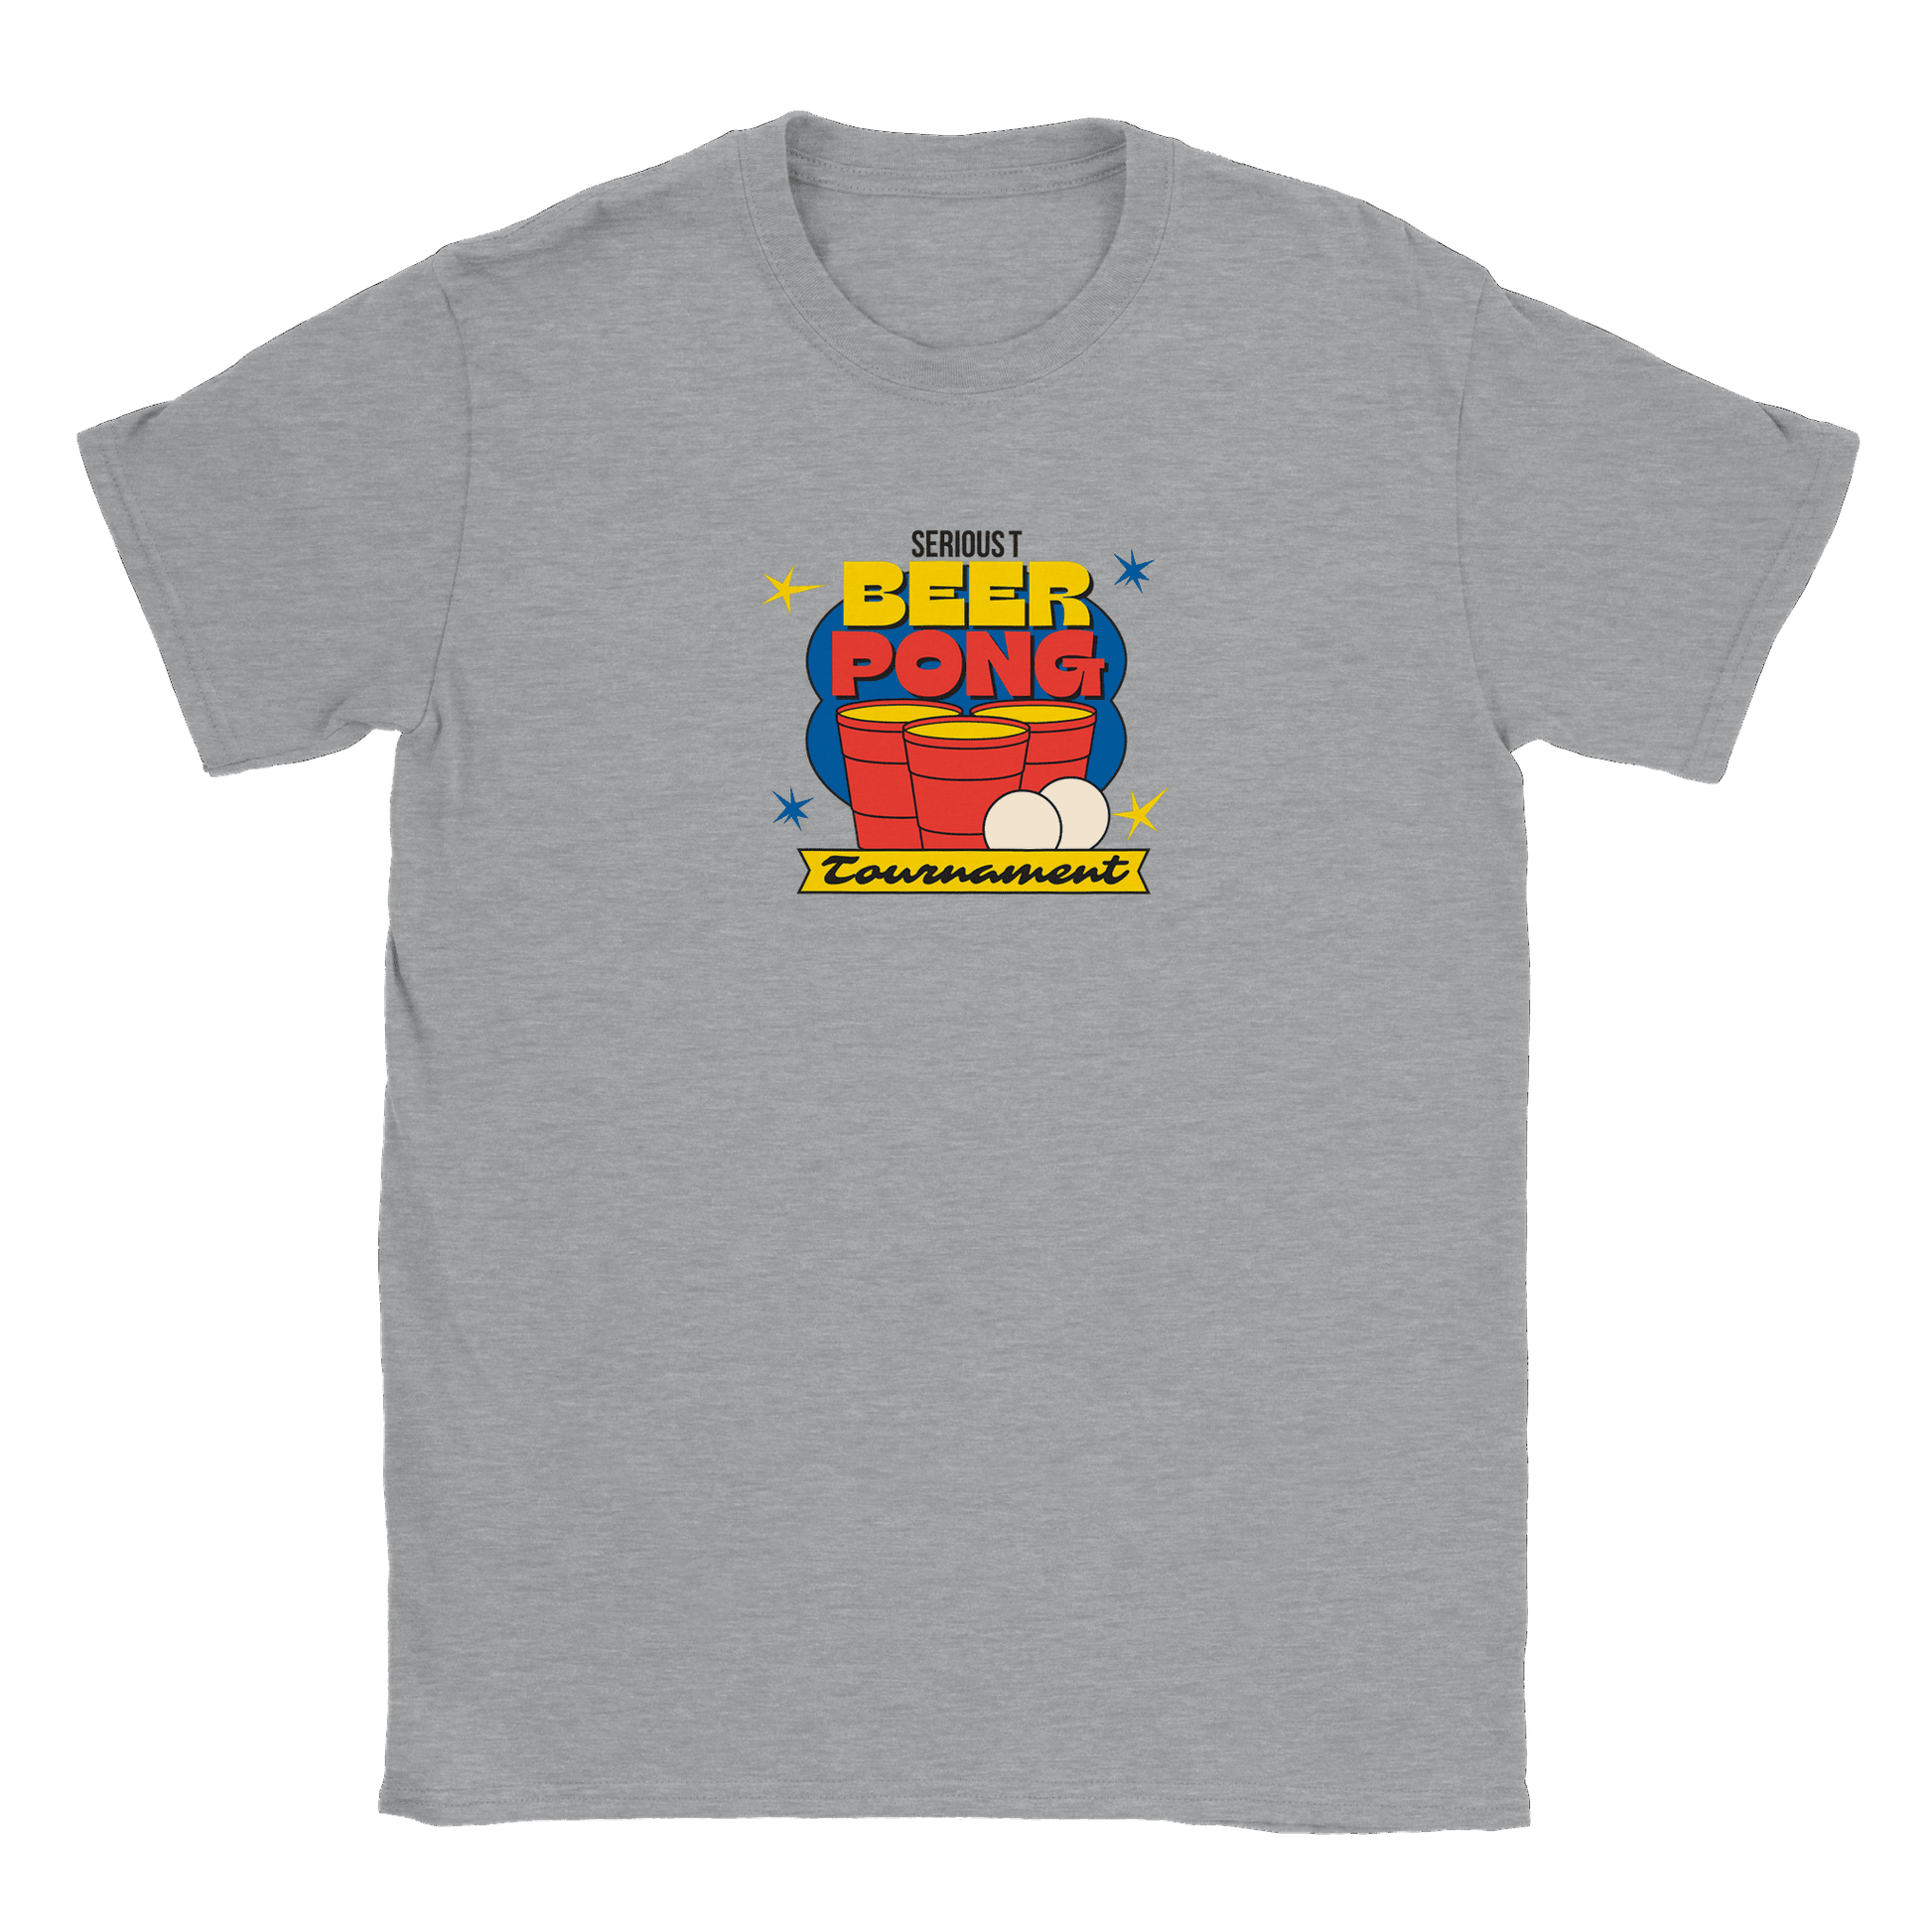 Beer Pong Tournament - T-shirt Sports Grey